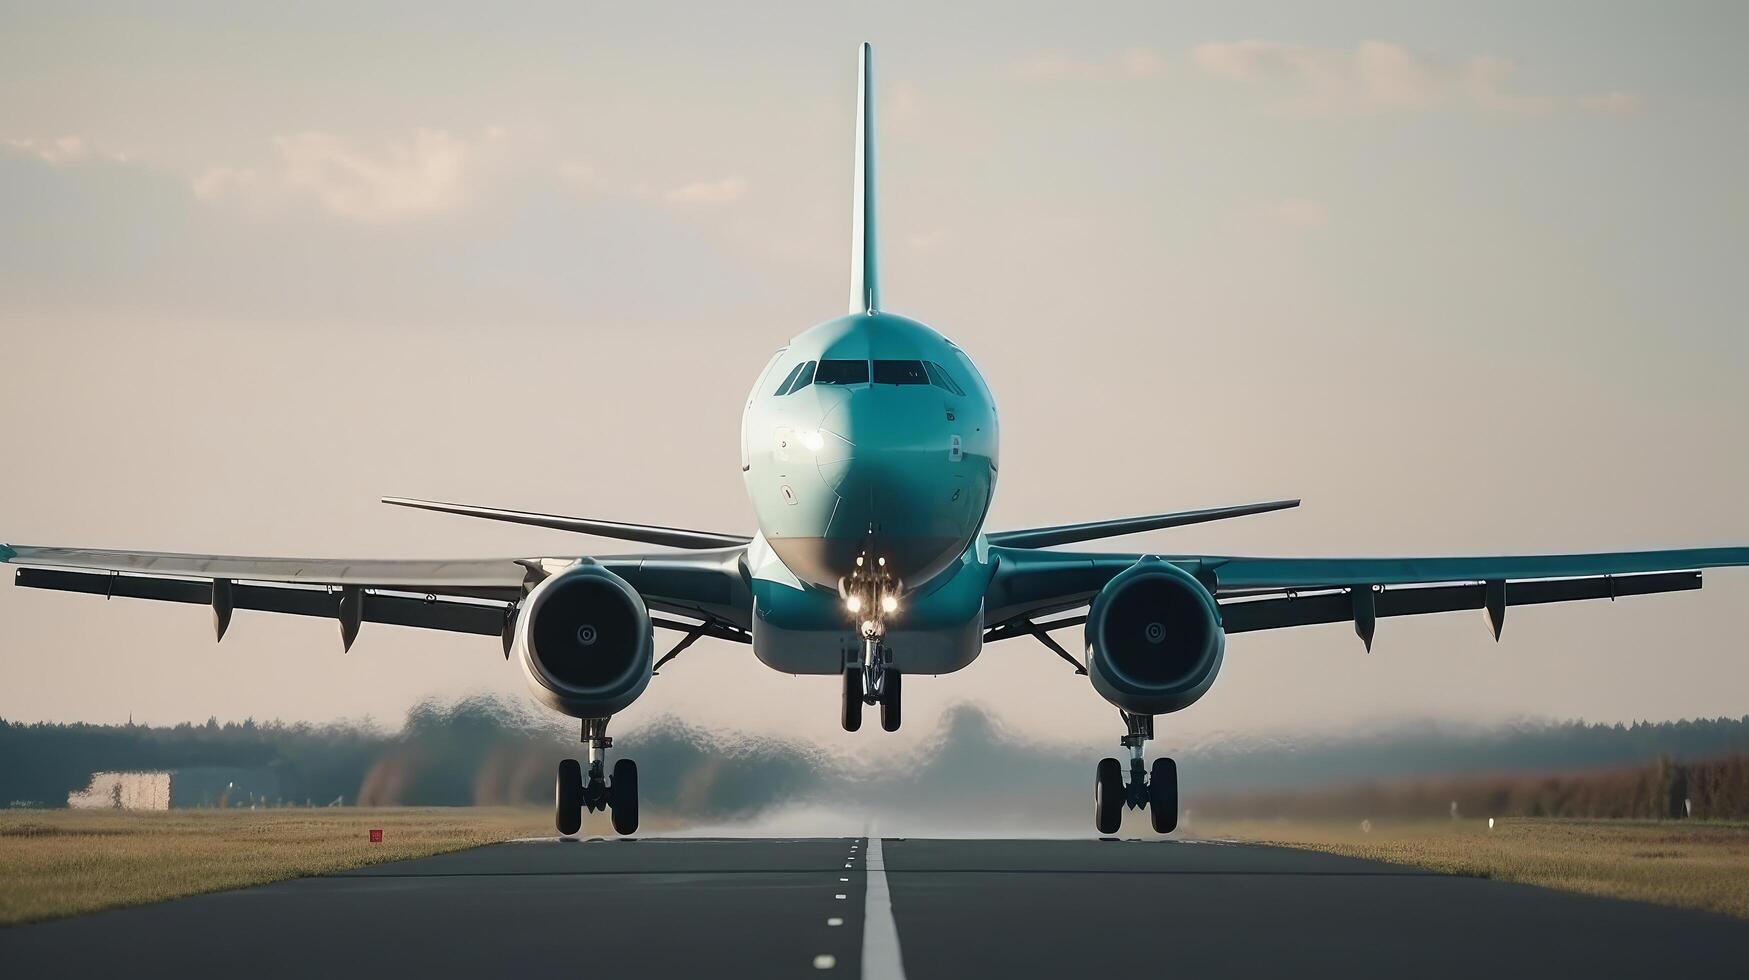 Plane on the runway. Illustration photo